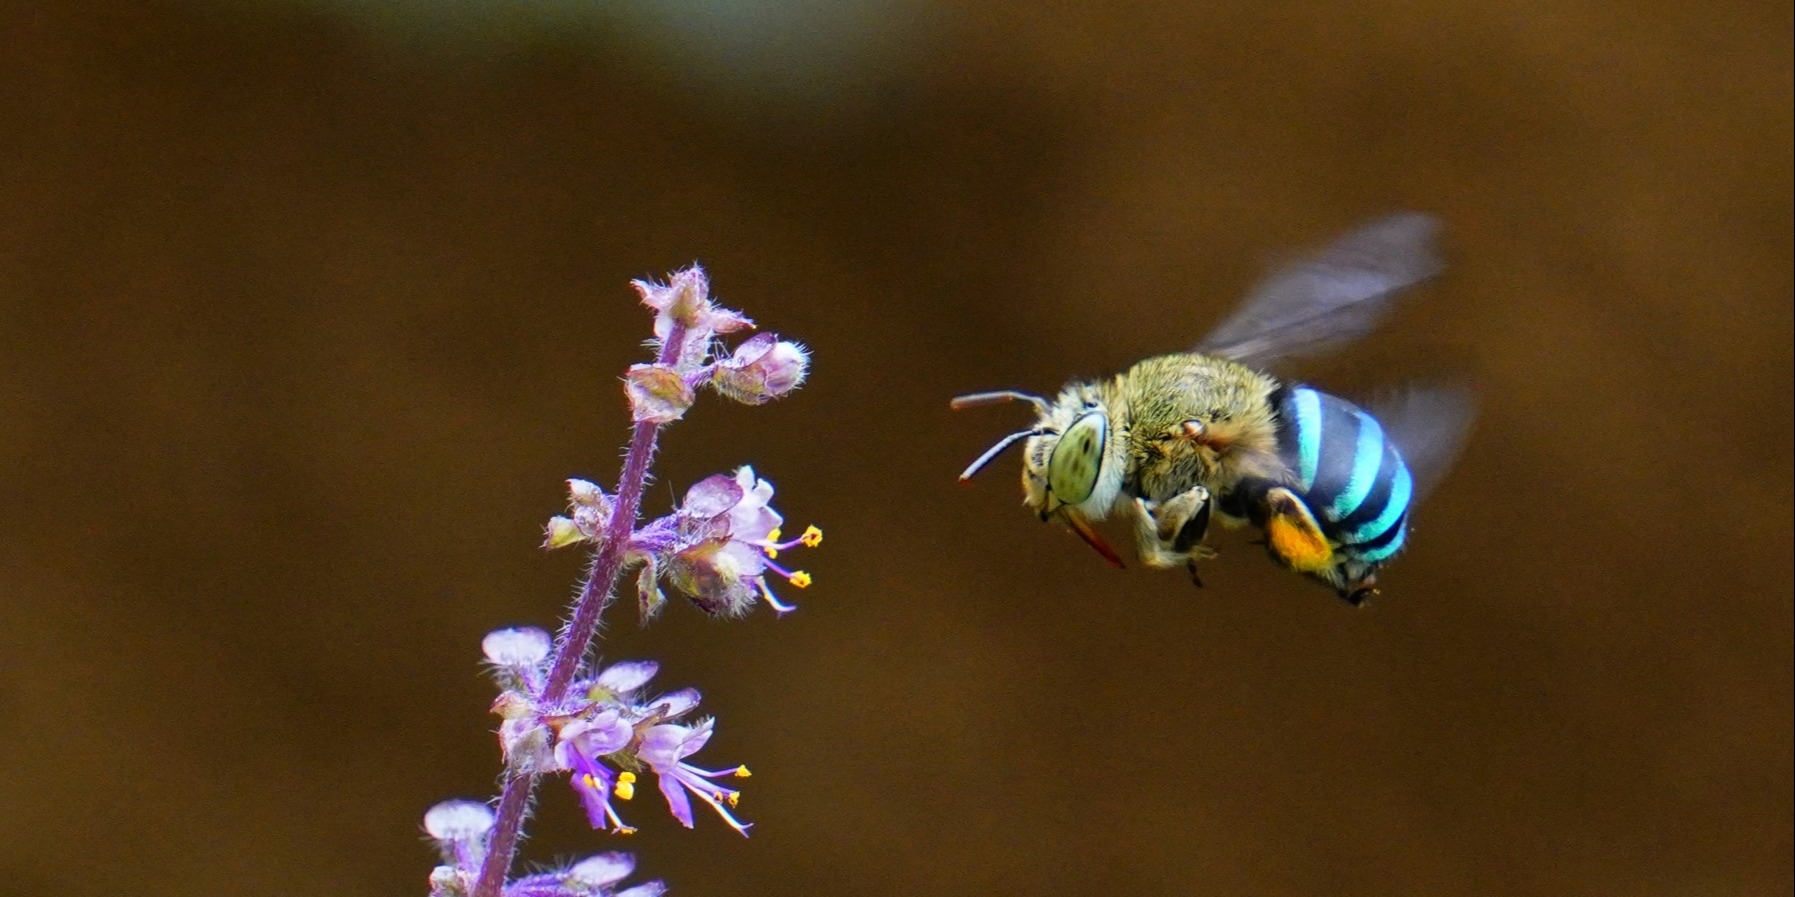 Creating Habitat for Pollinators – workshop